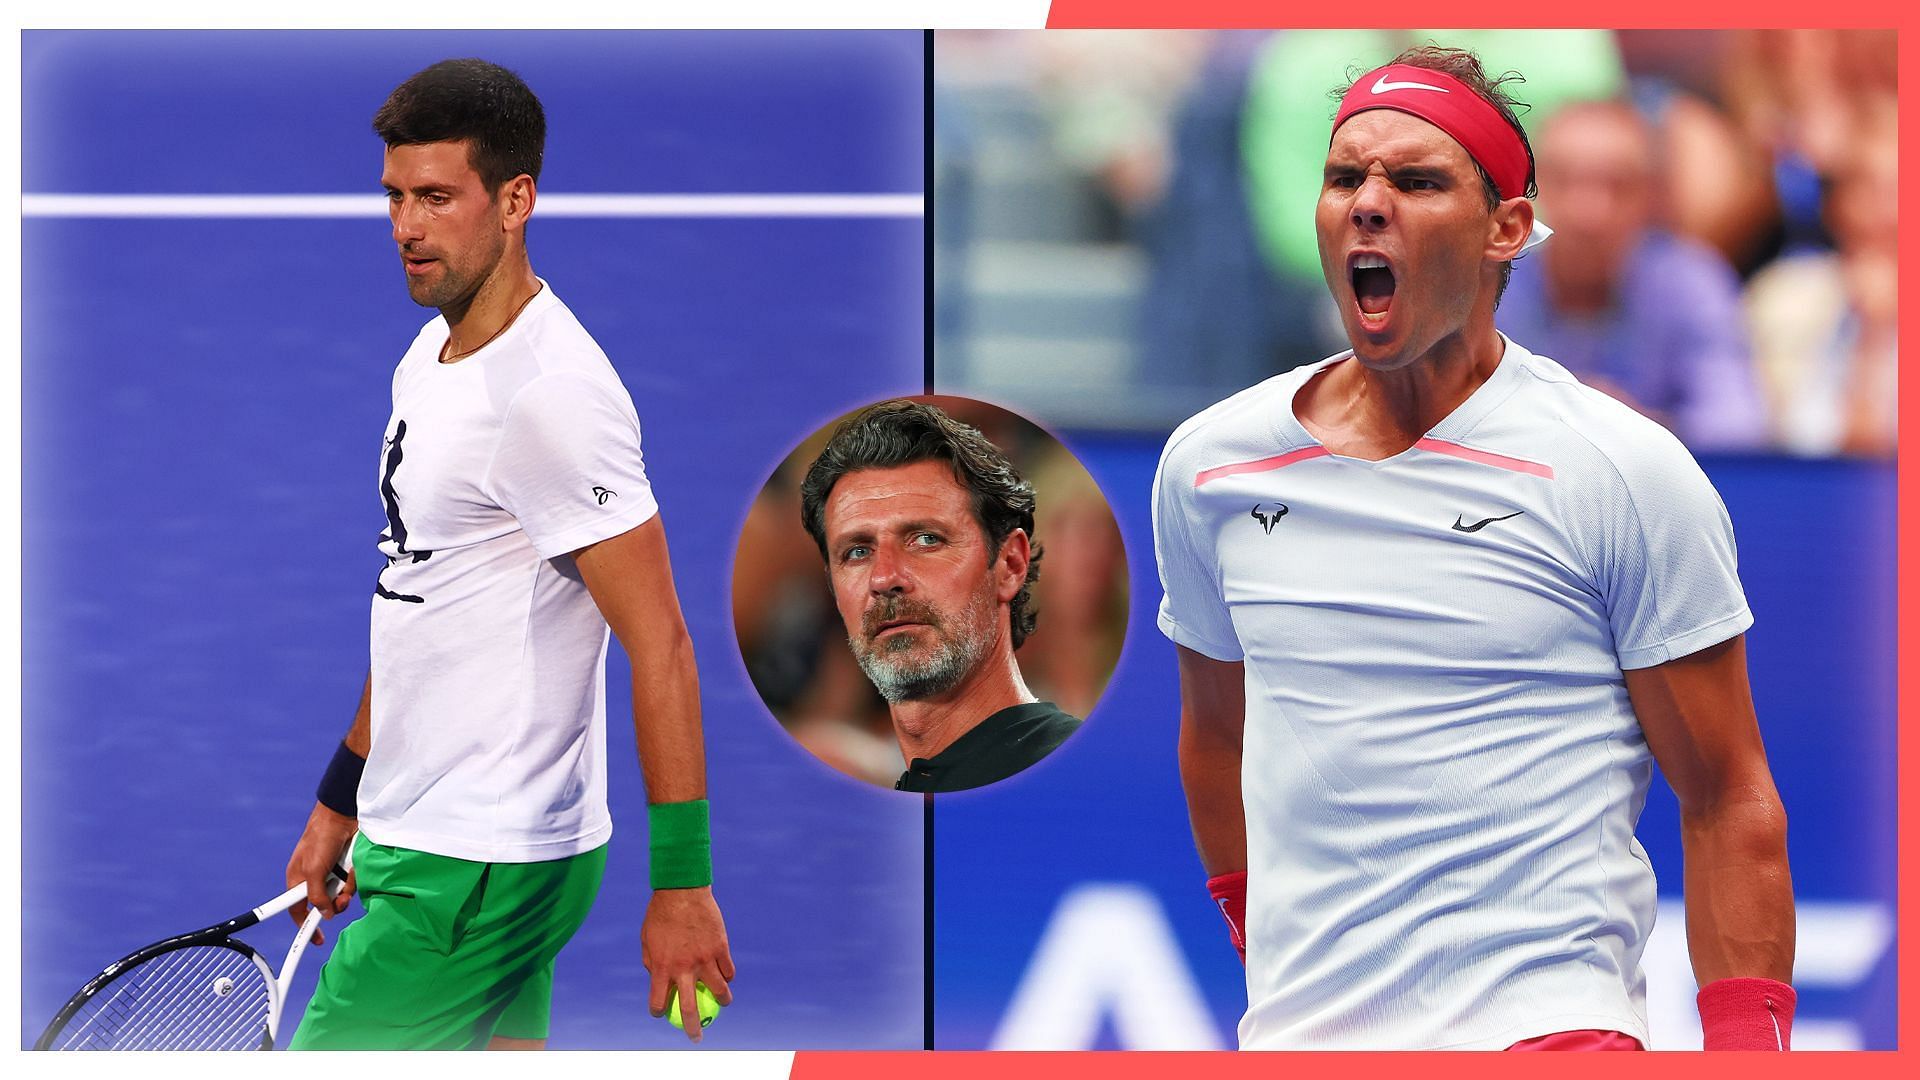 Patrick Mouratoglou speak about the Novak Djokovic-Rafael Nadal rivalry